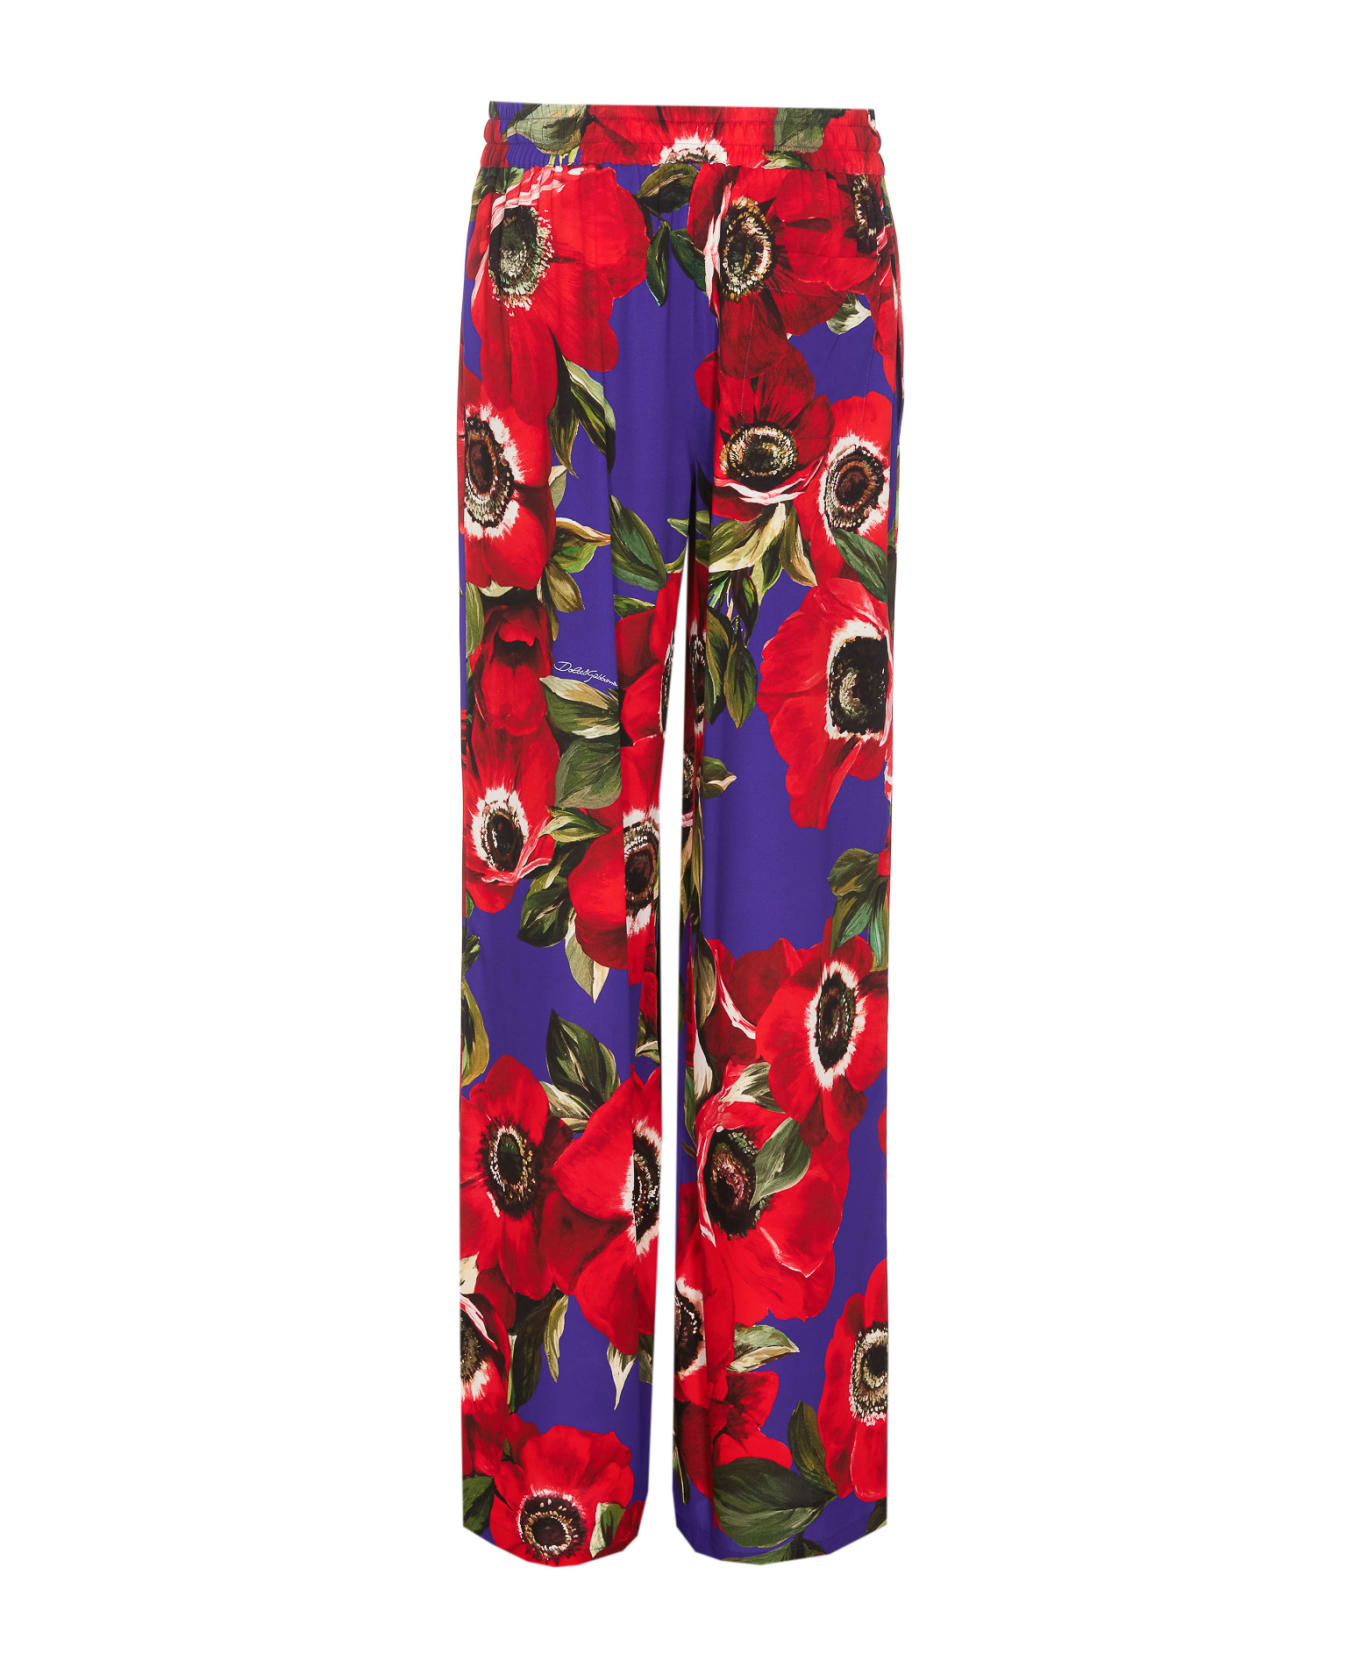 Dolce & Gabbana Printed Silk Pants - red